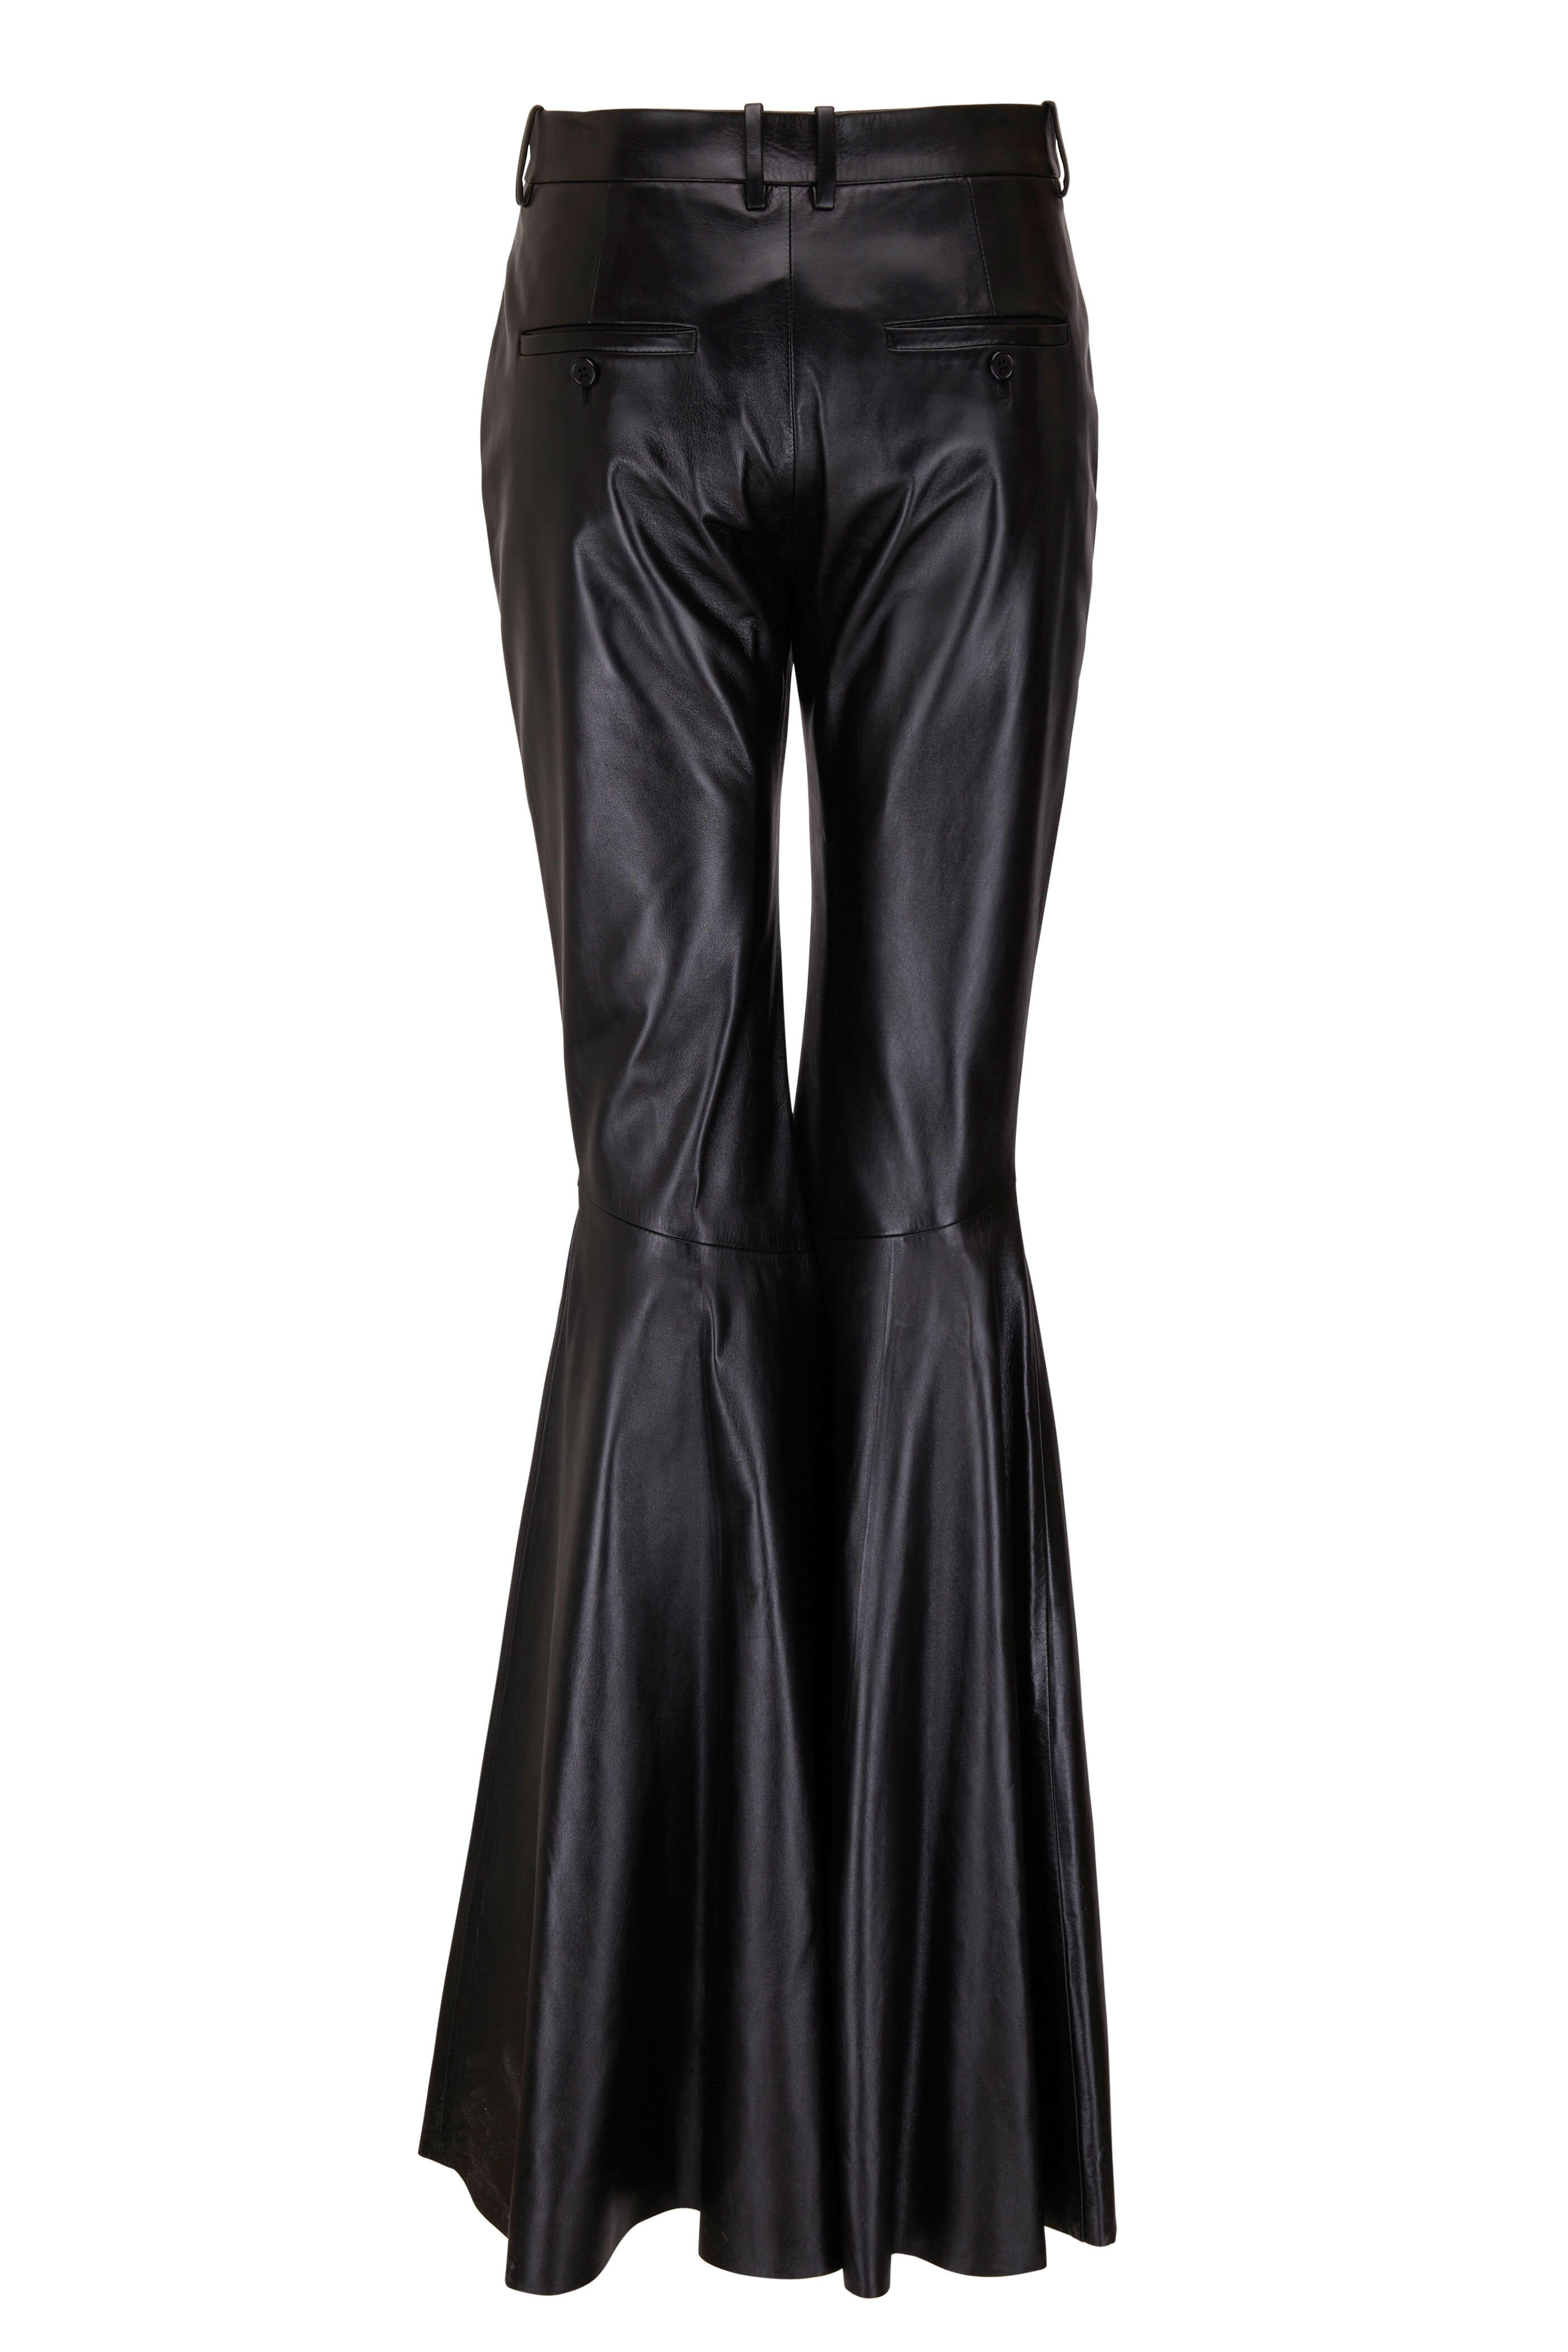 Saint Laurent - Black Leather Bellbottom Pant